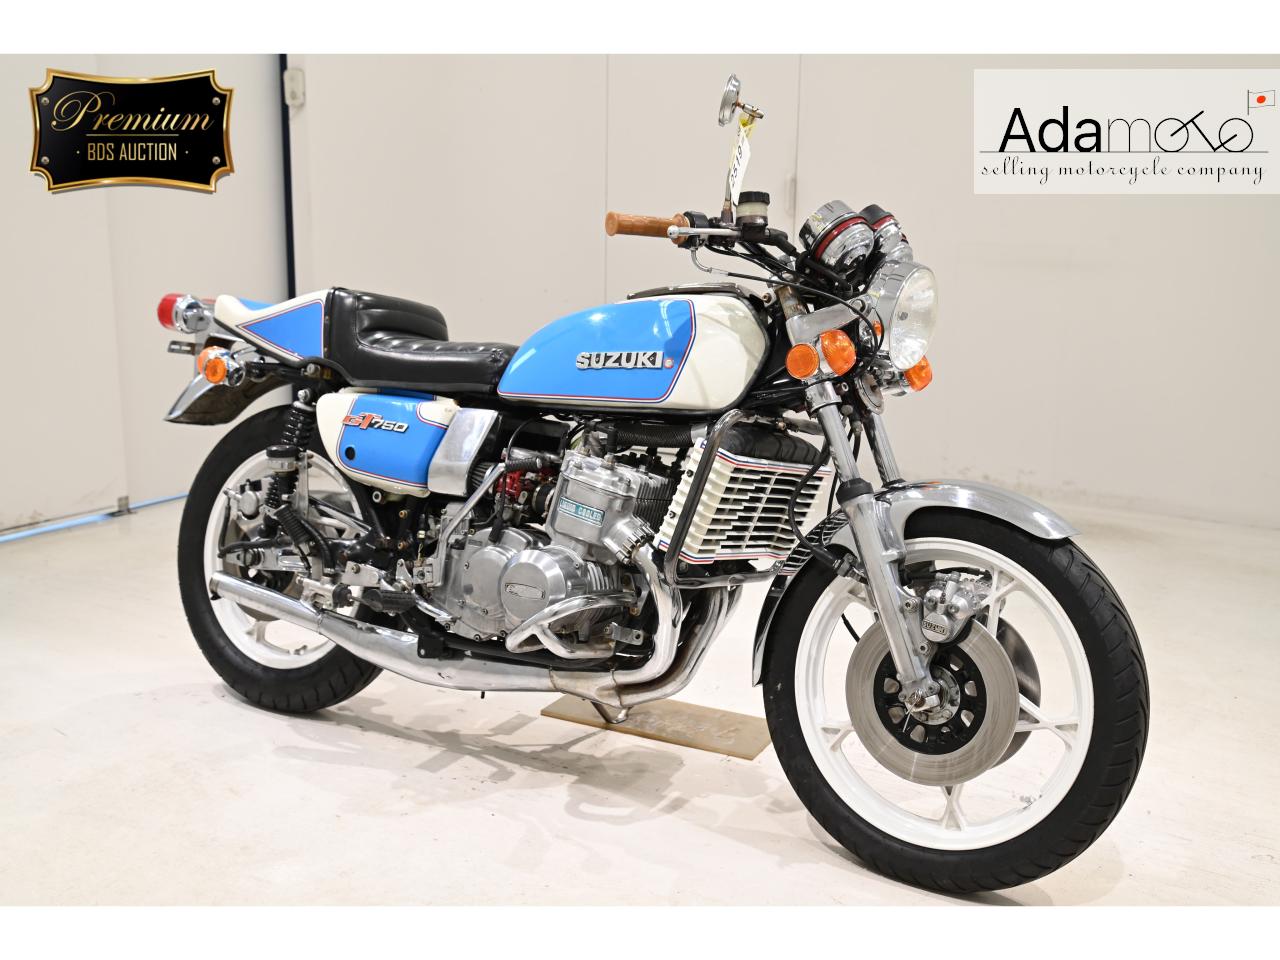 Suzuki GT750 - Adamoto - Motorcycles from Japan